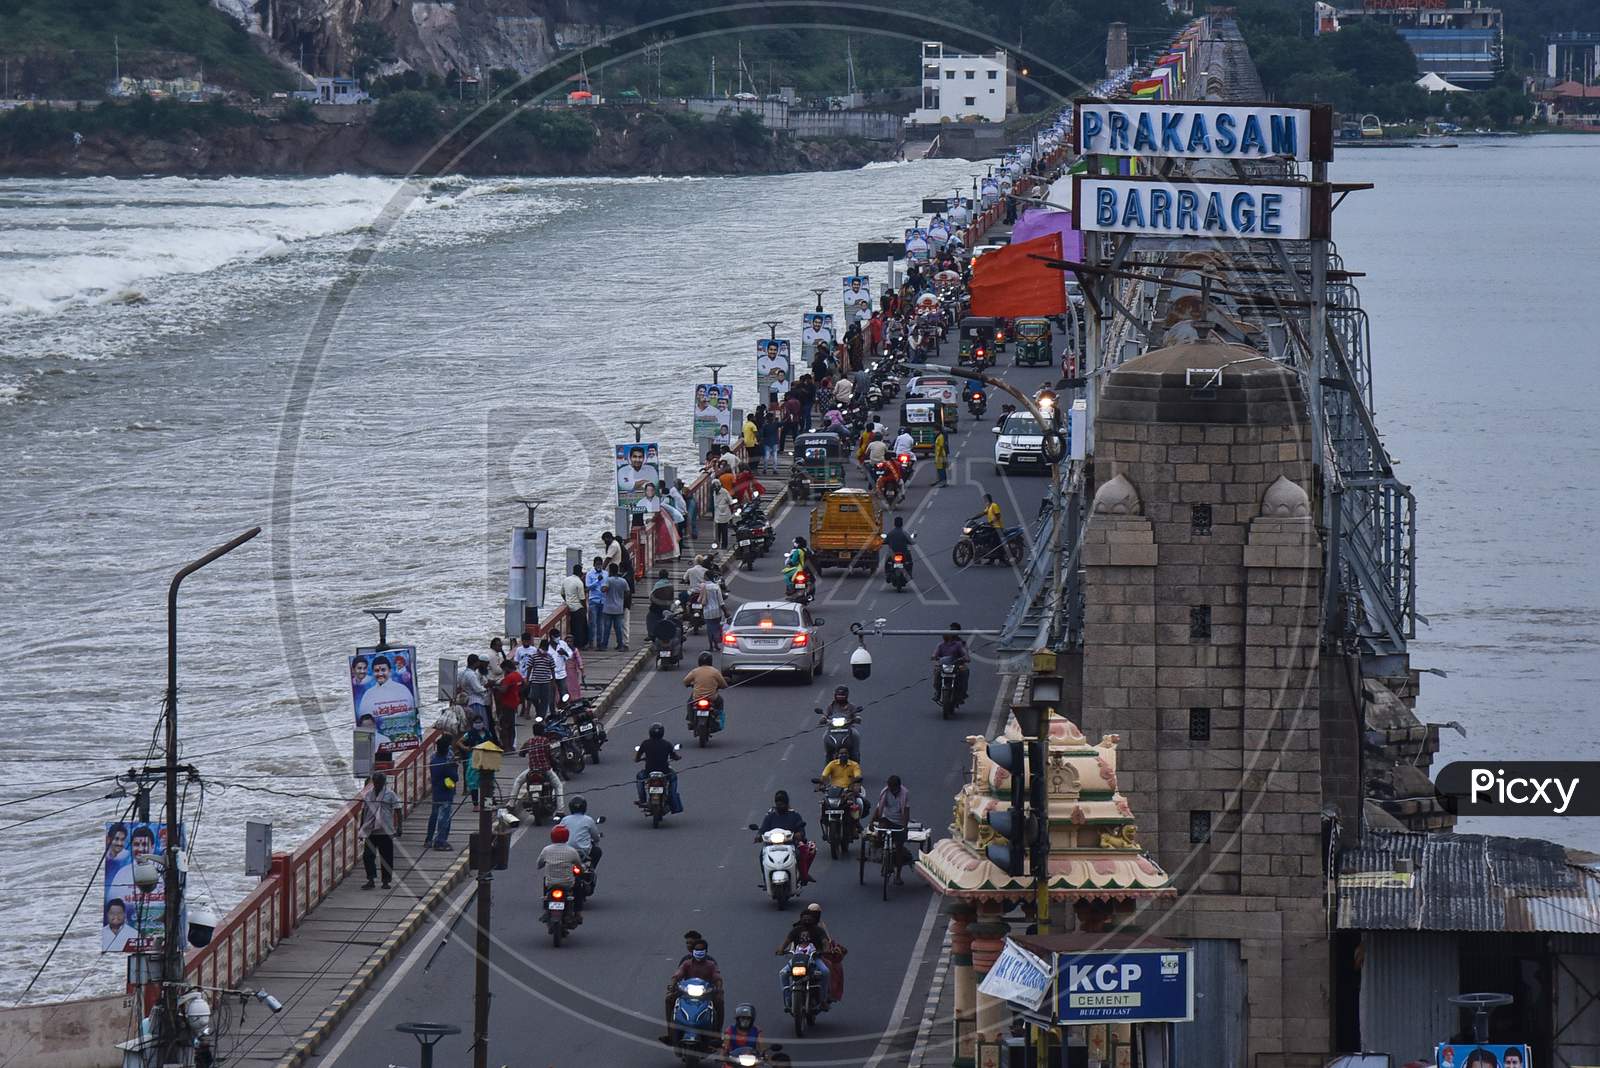 A View Of Prakasam Barrage, In Vijayawada On August 27, 2020.